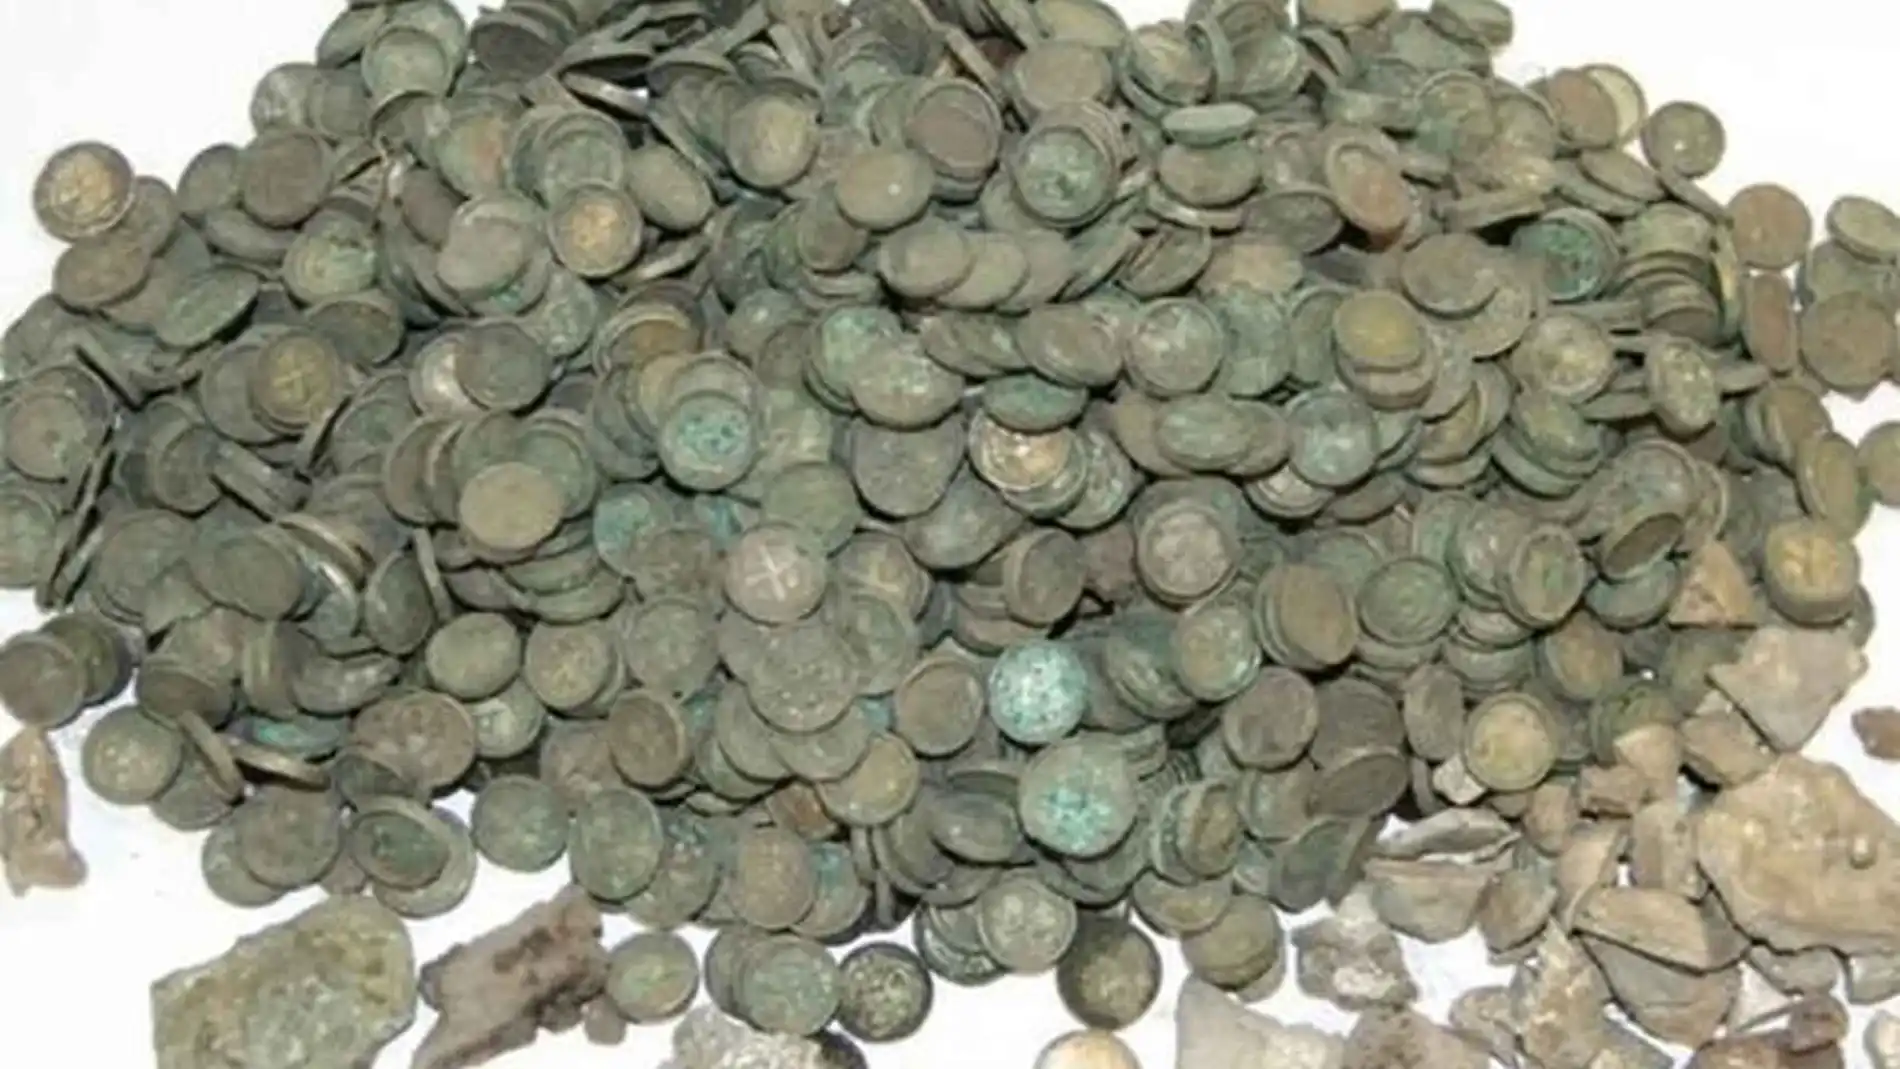 Monedas de plata halladas en un recipiente de plata en Polonia